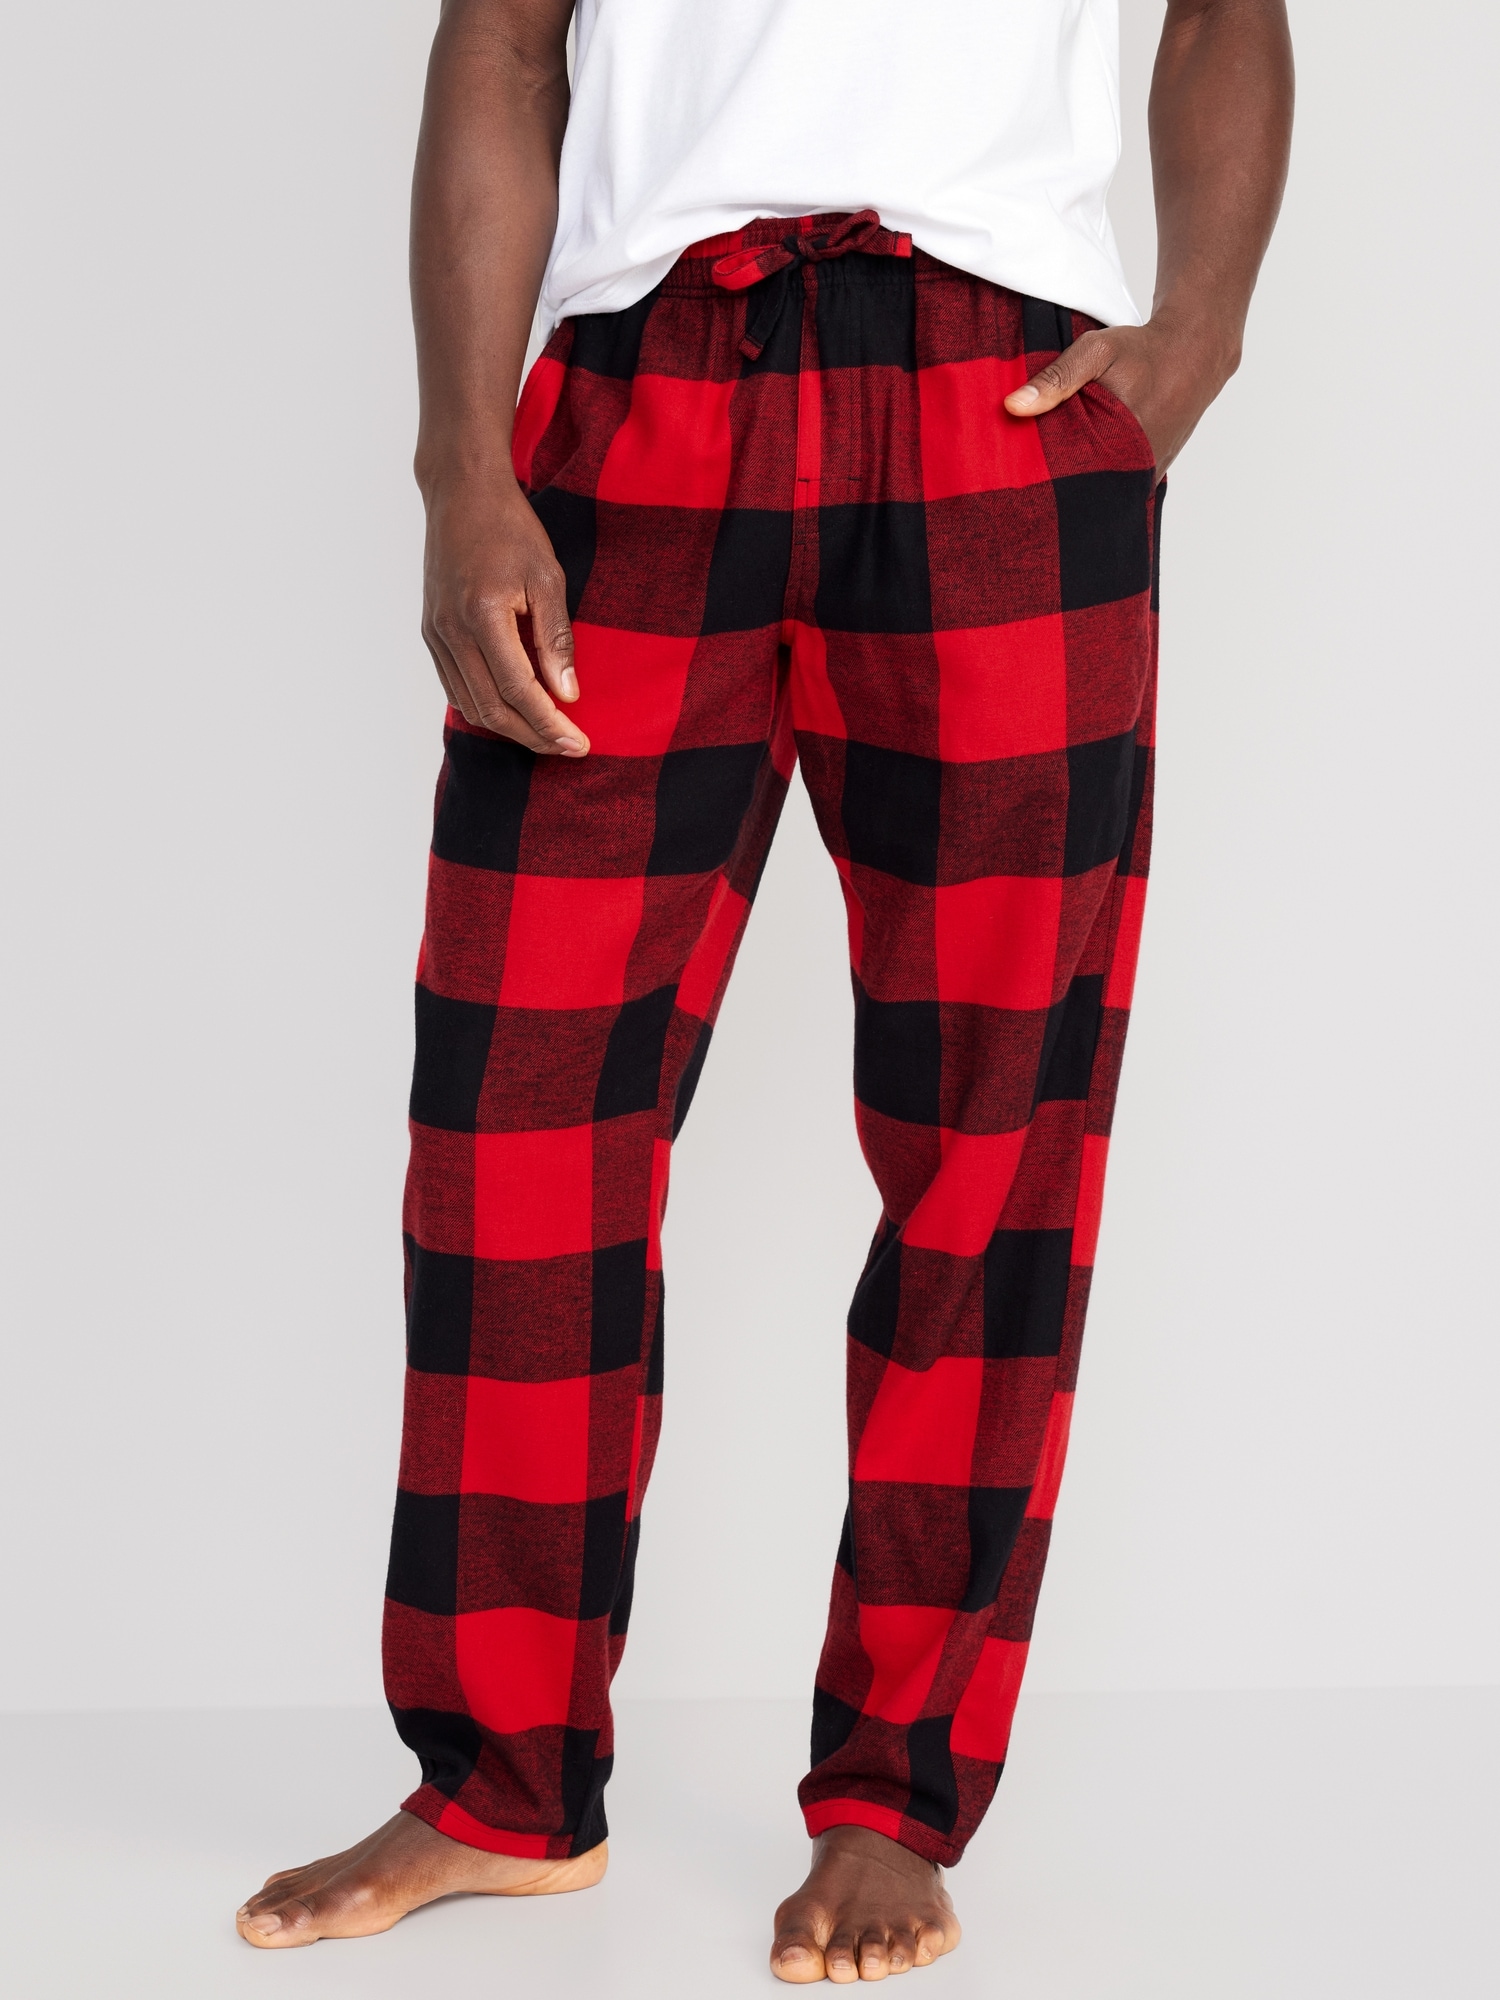  2 Pack Pajama Pants Men with Pockets Fleece Lounge